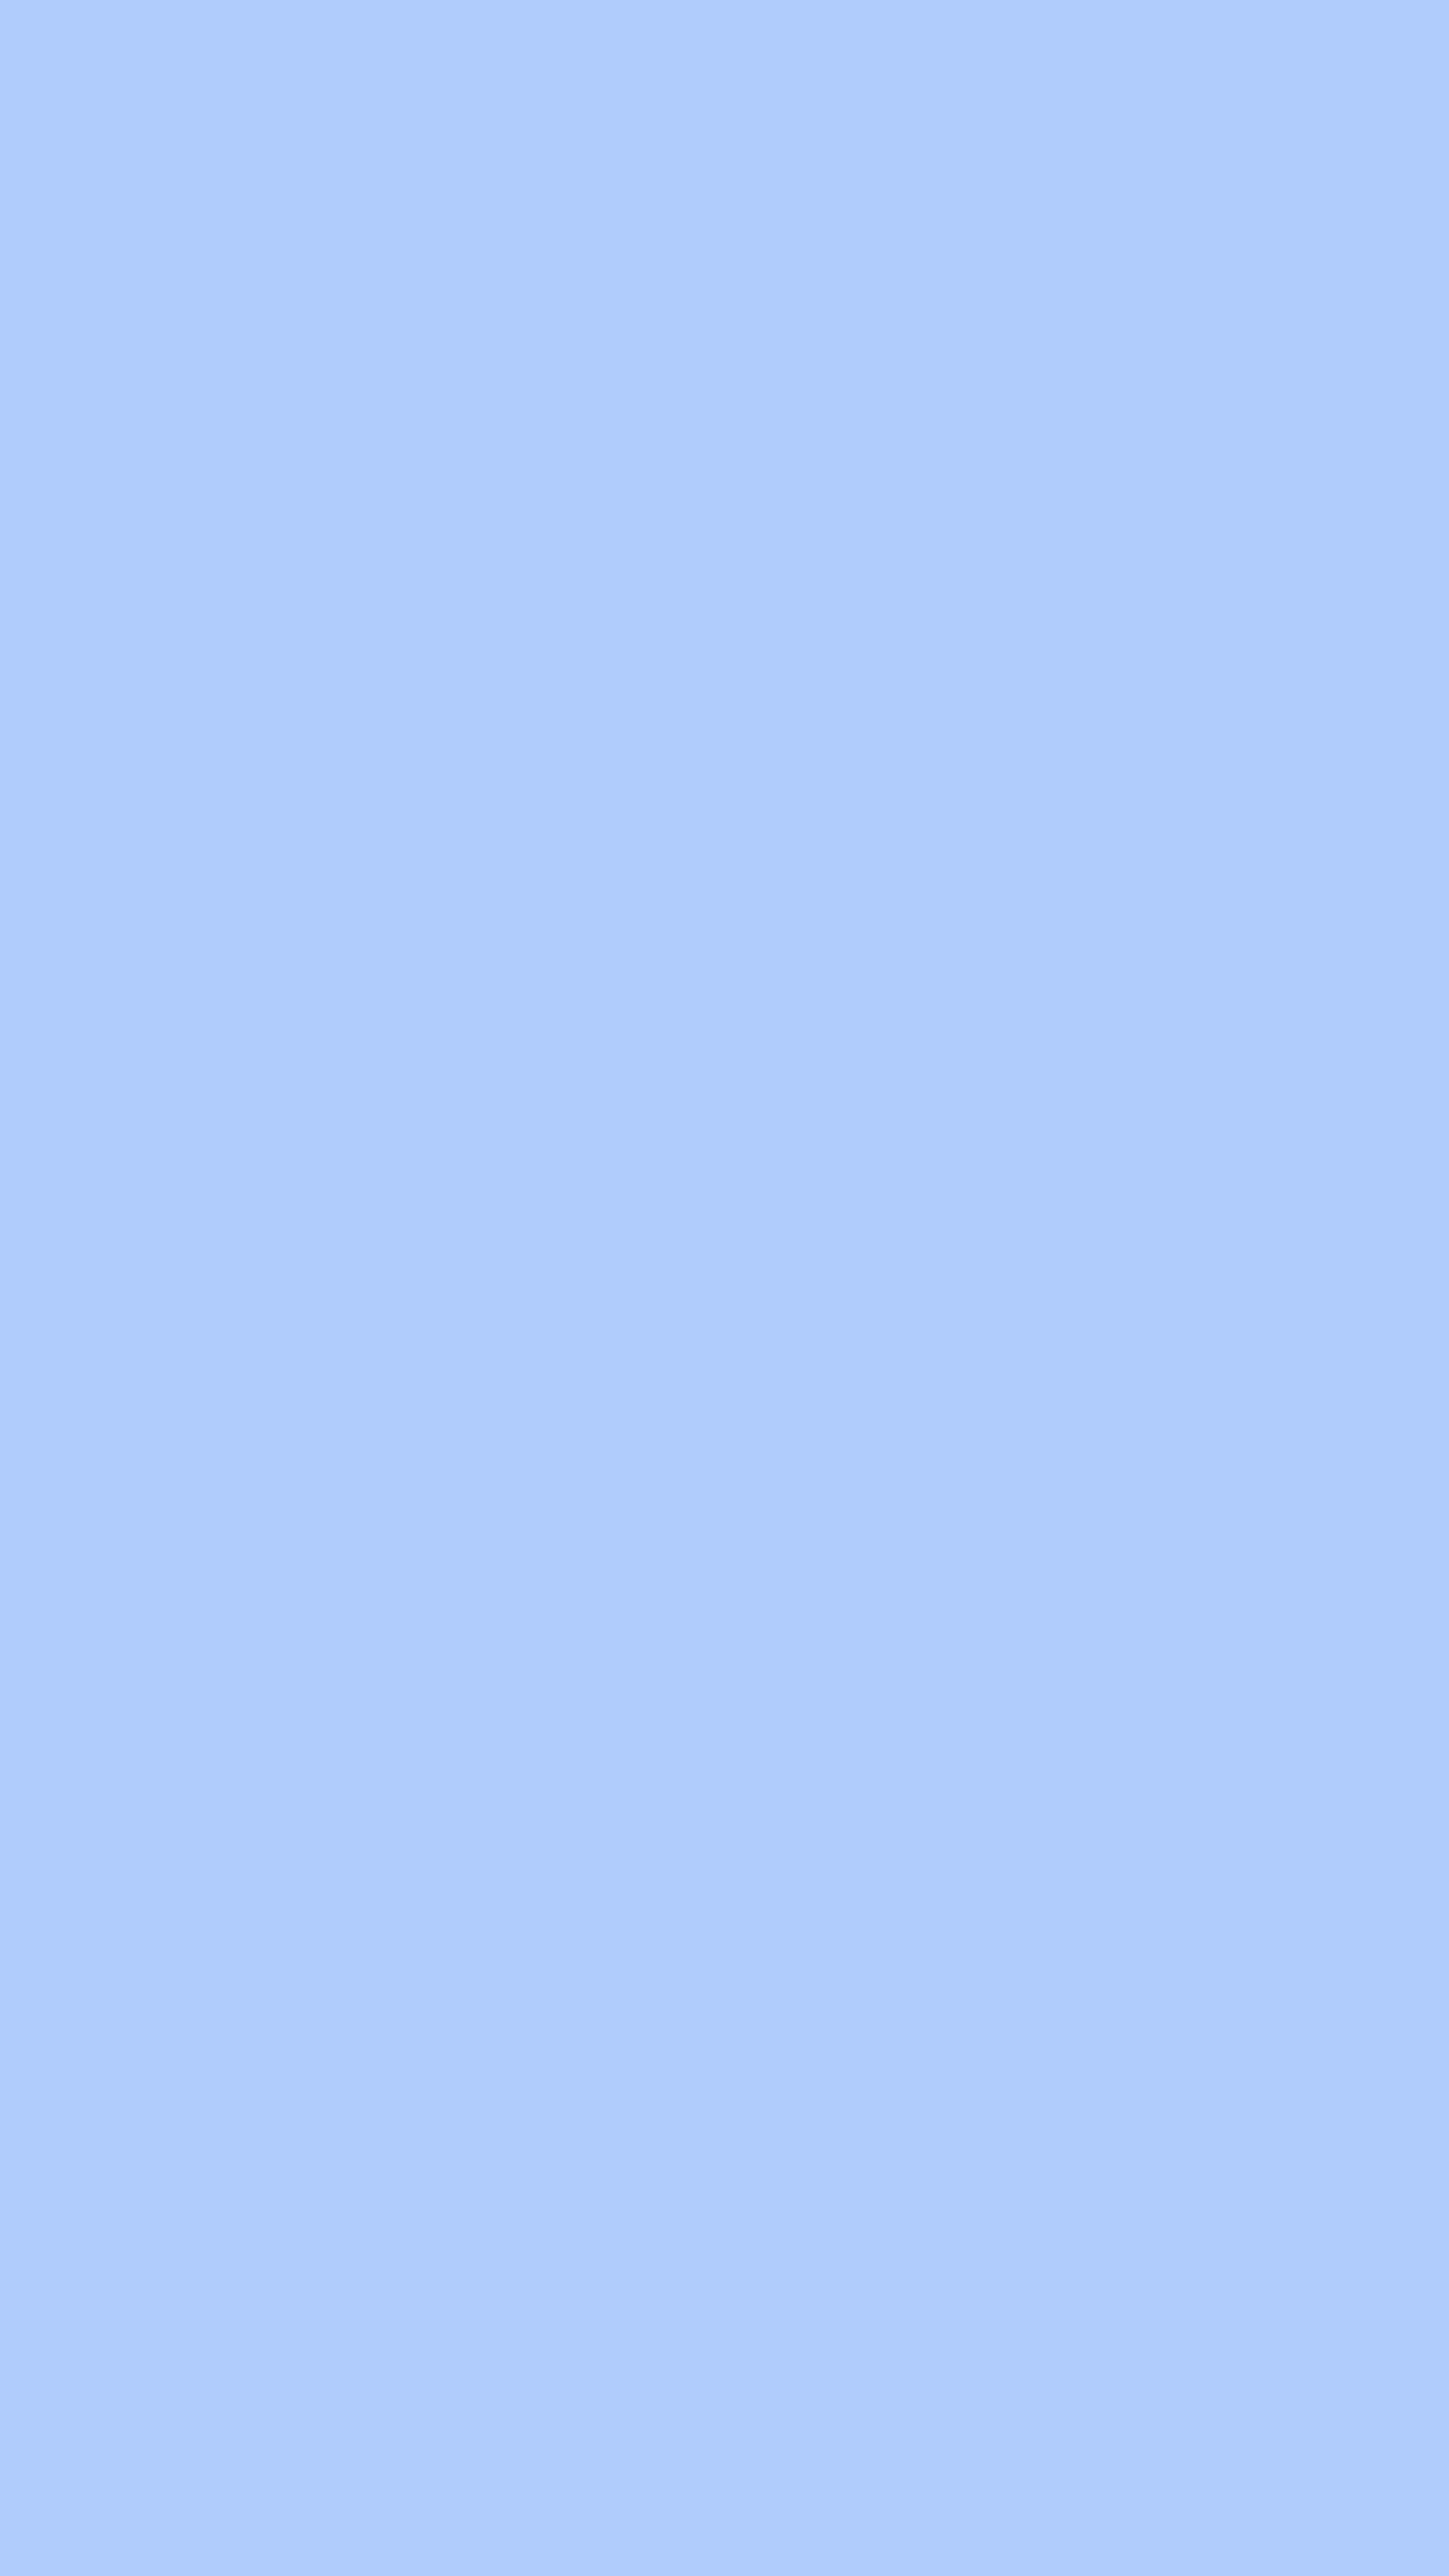 Blue Sky and Calm Ocean View Tapeta na zeď[ac4ed42ee68f4276b2a9]